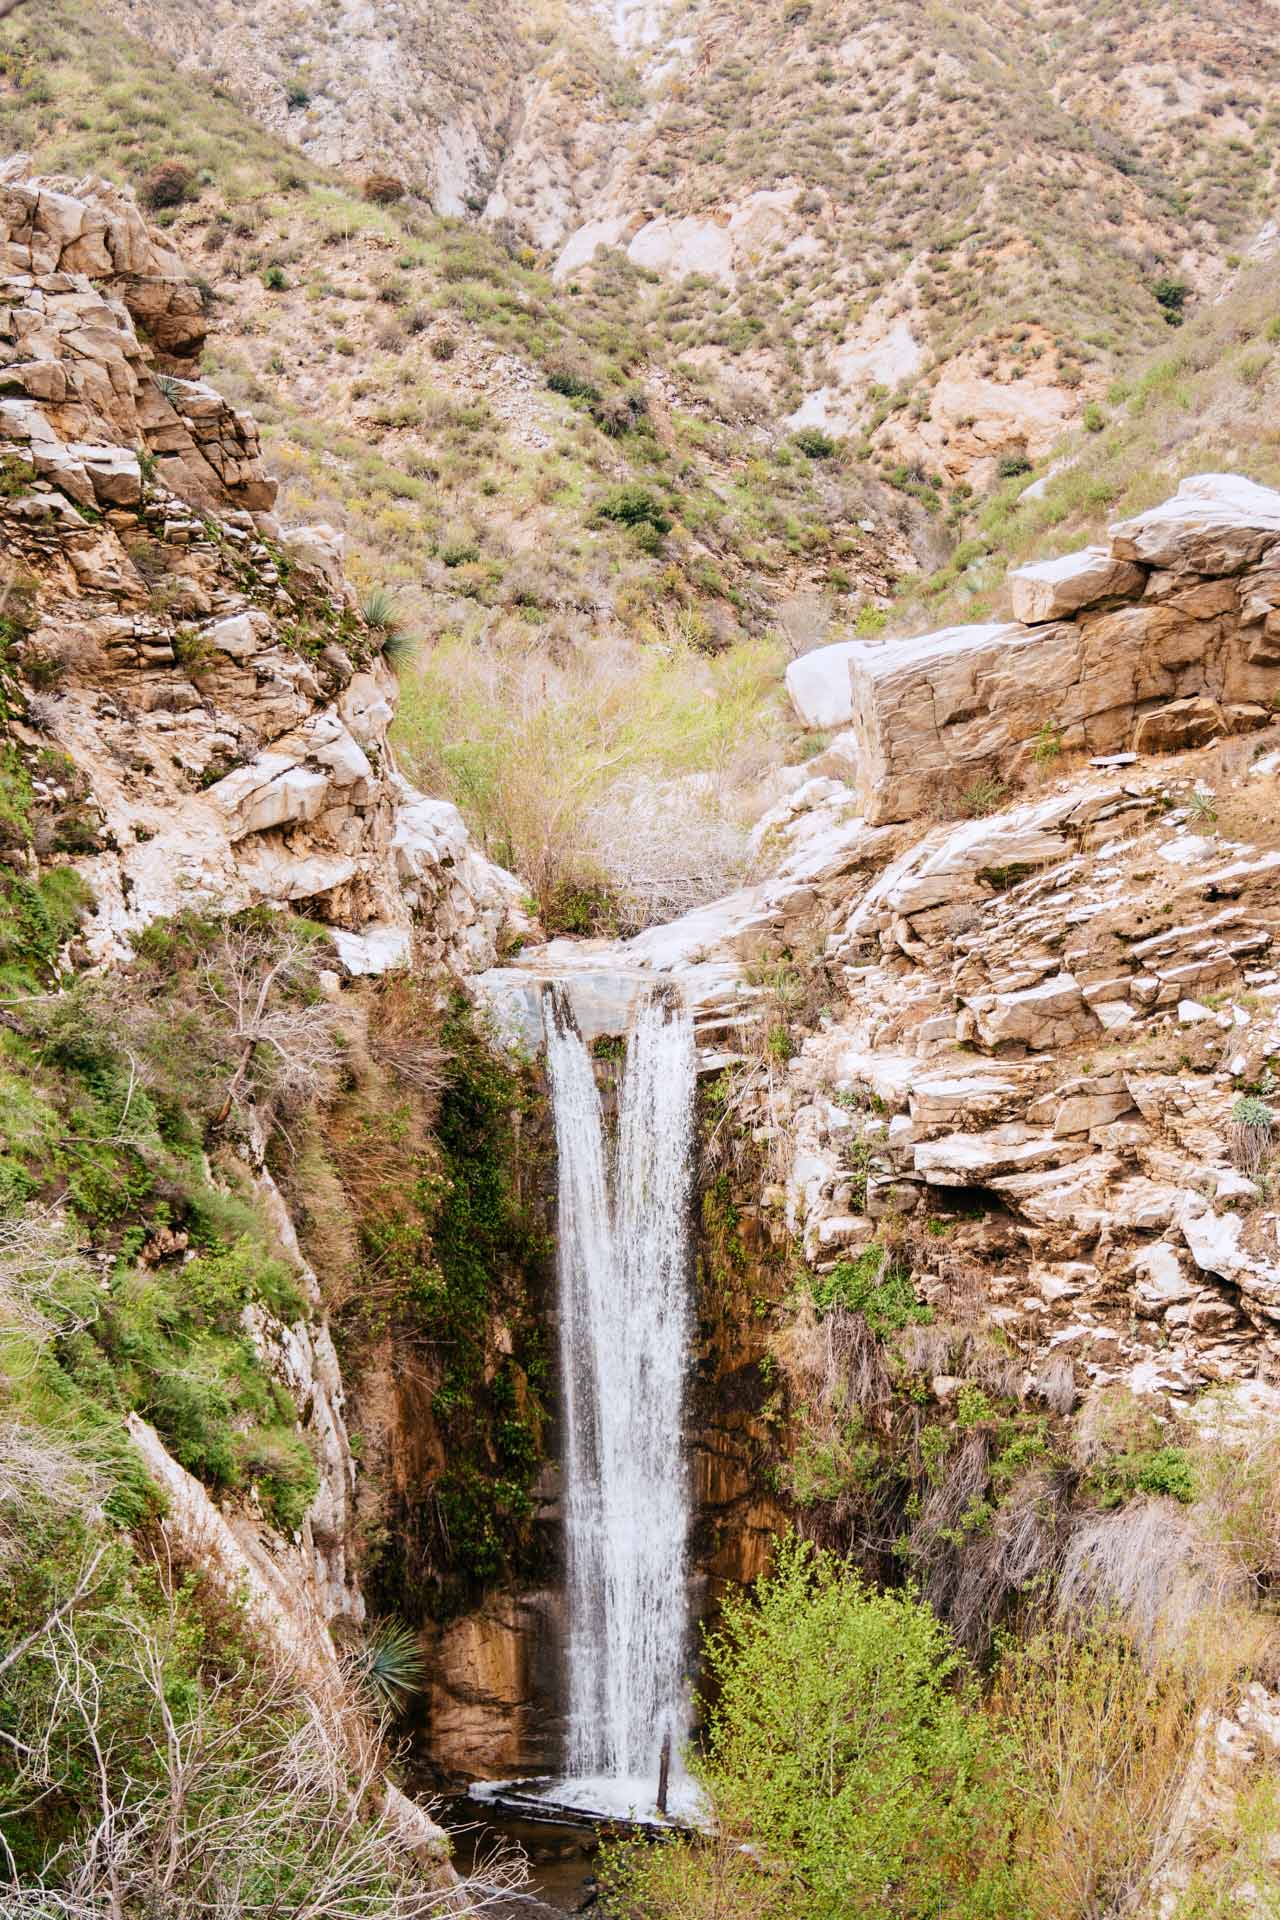 go-with-the-flow-4-trail-canyon-falls-2-by-ramin-kohanteb